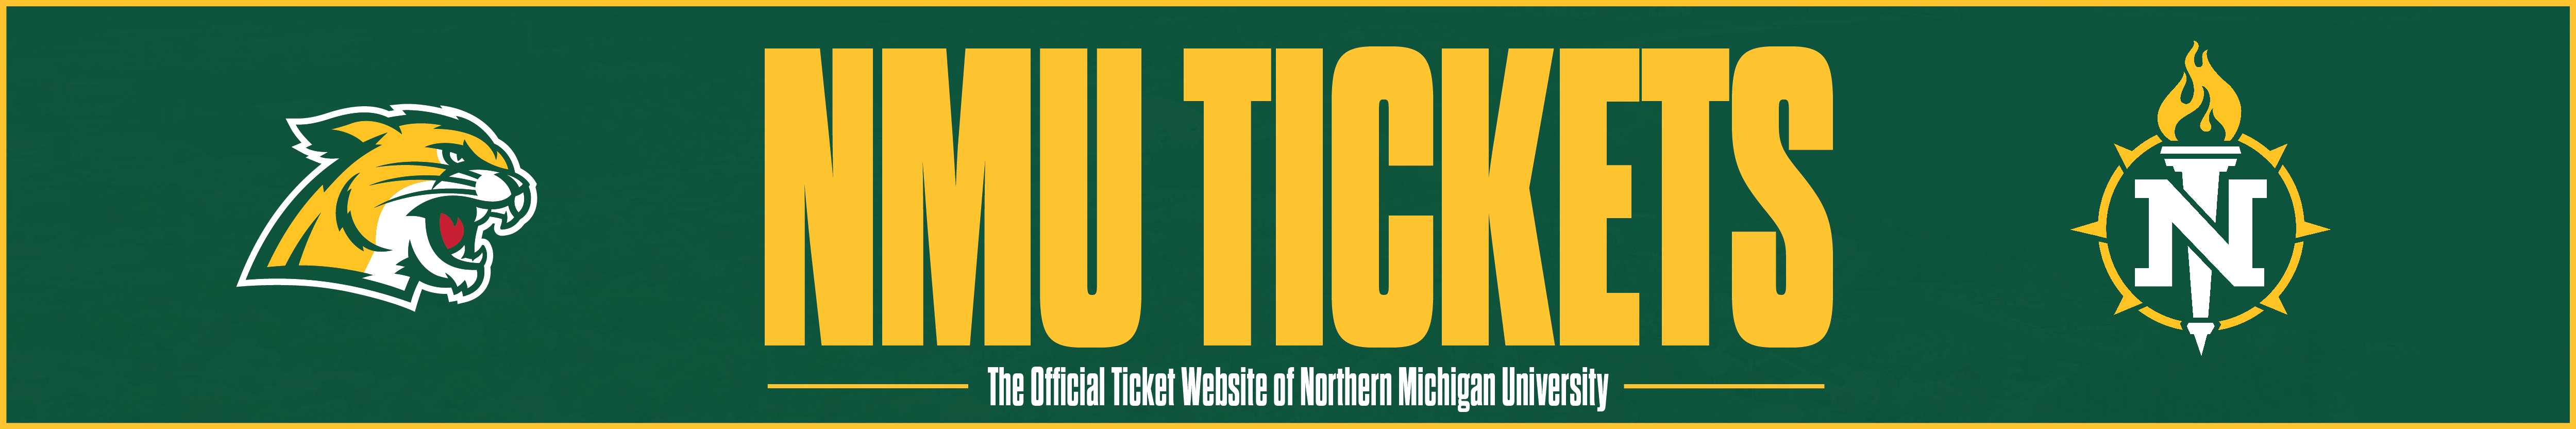 Northern Michigan University |  Ticketing